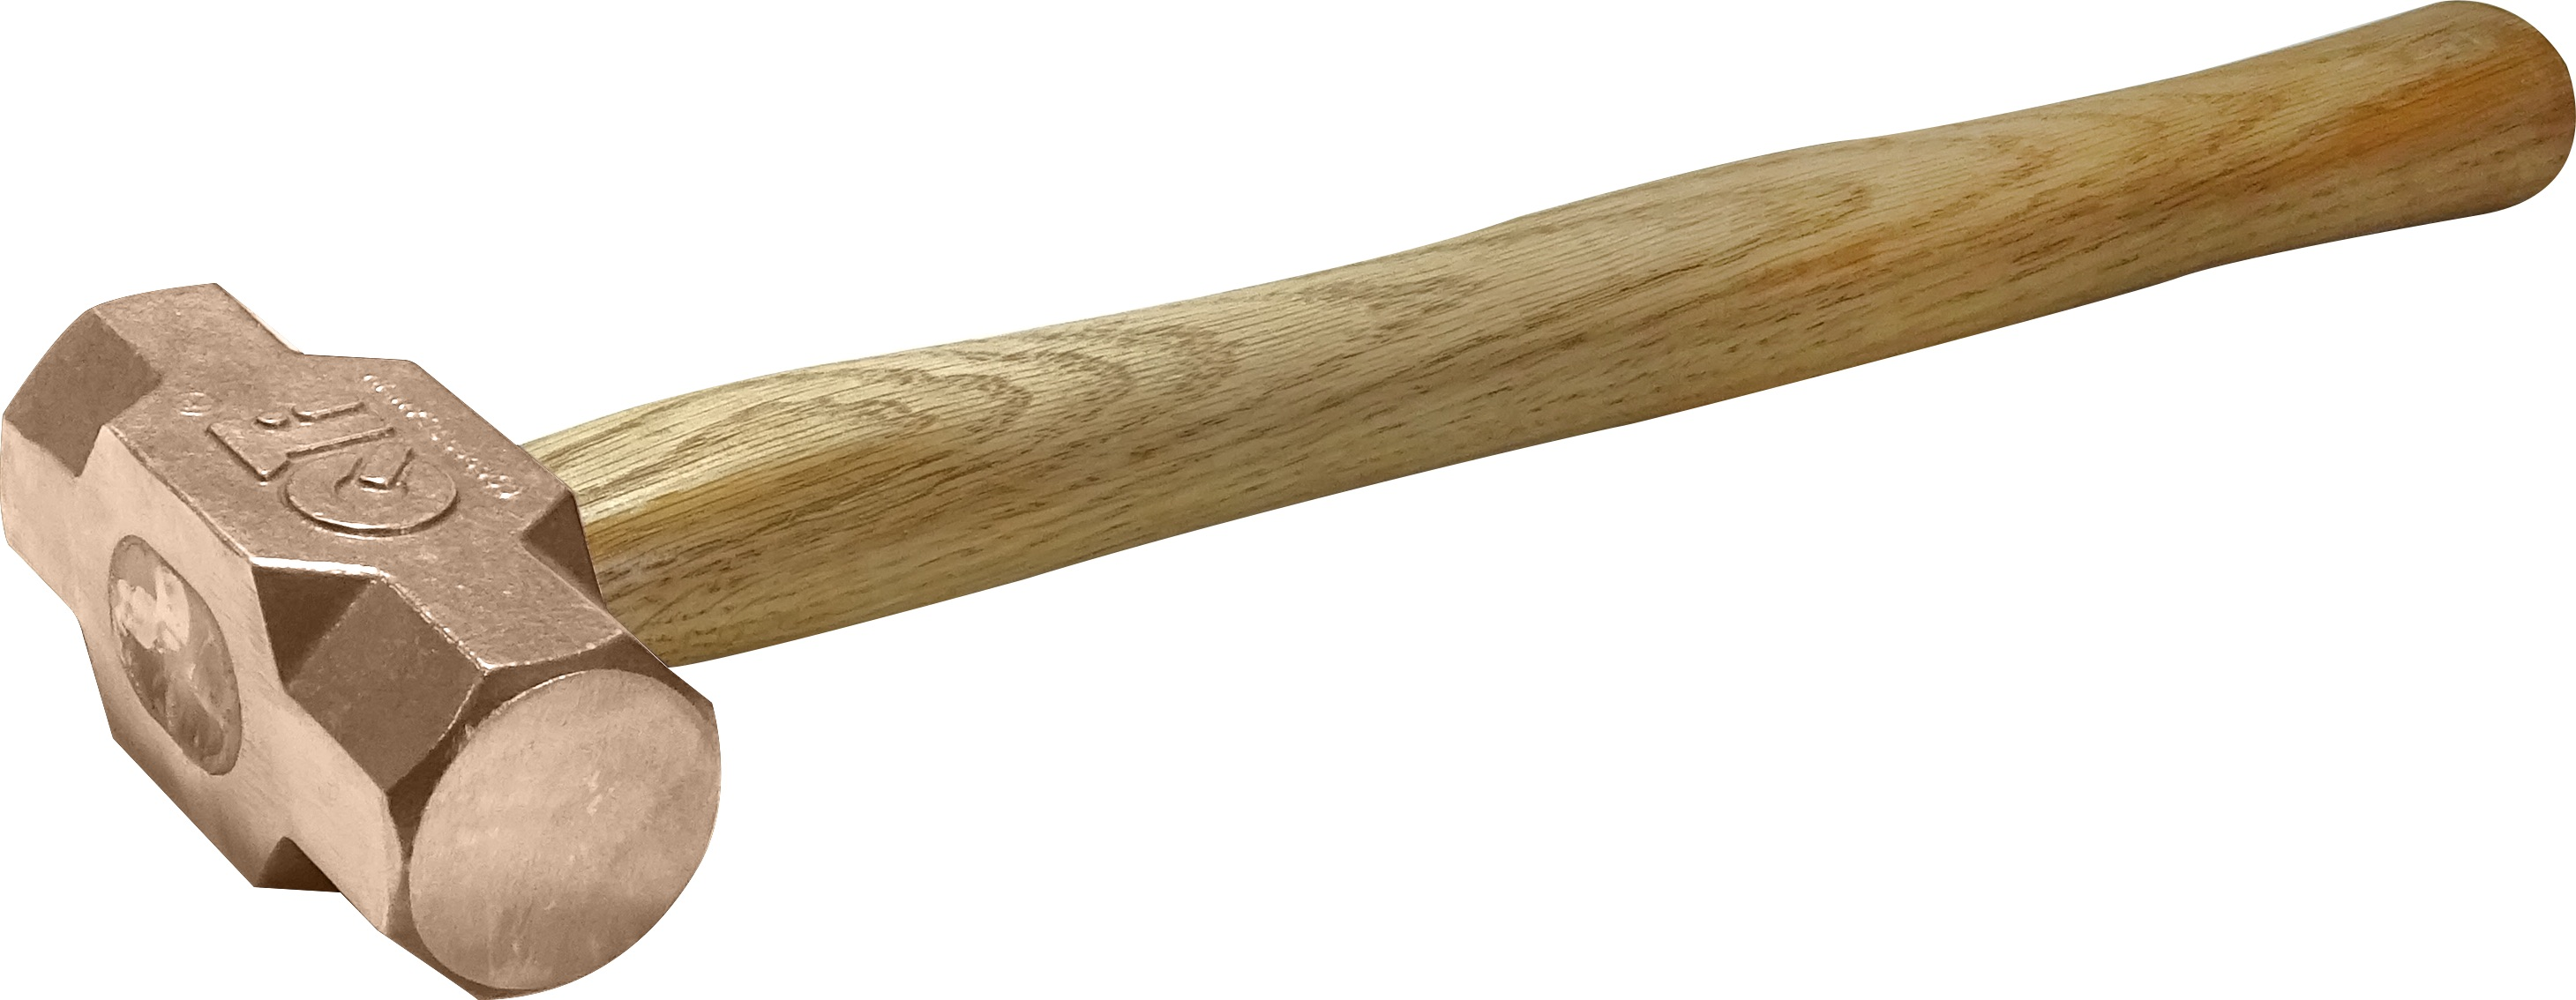 QTi® Sledge Hammer - 5000 Gms / 11 lbs (Wooden Handle)